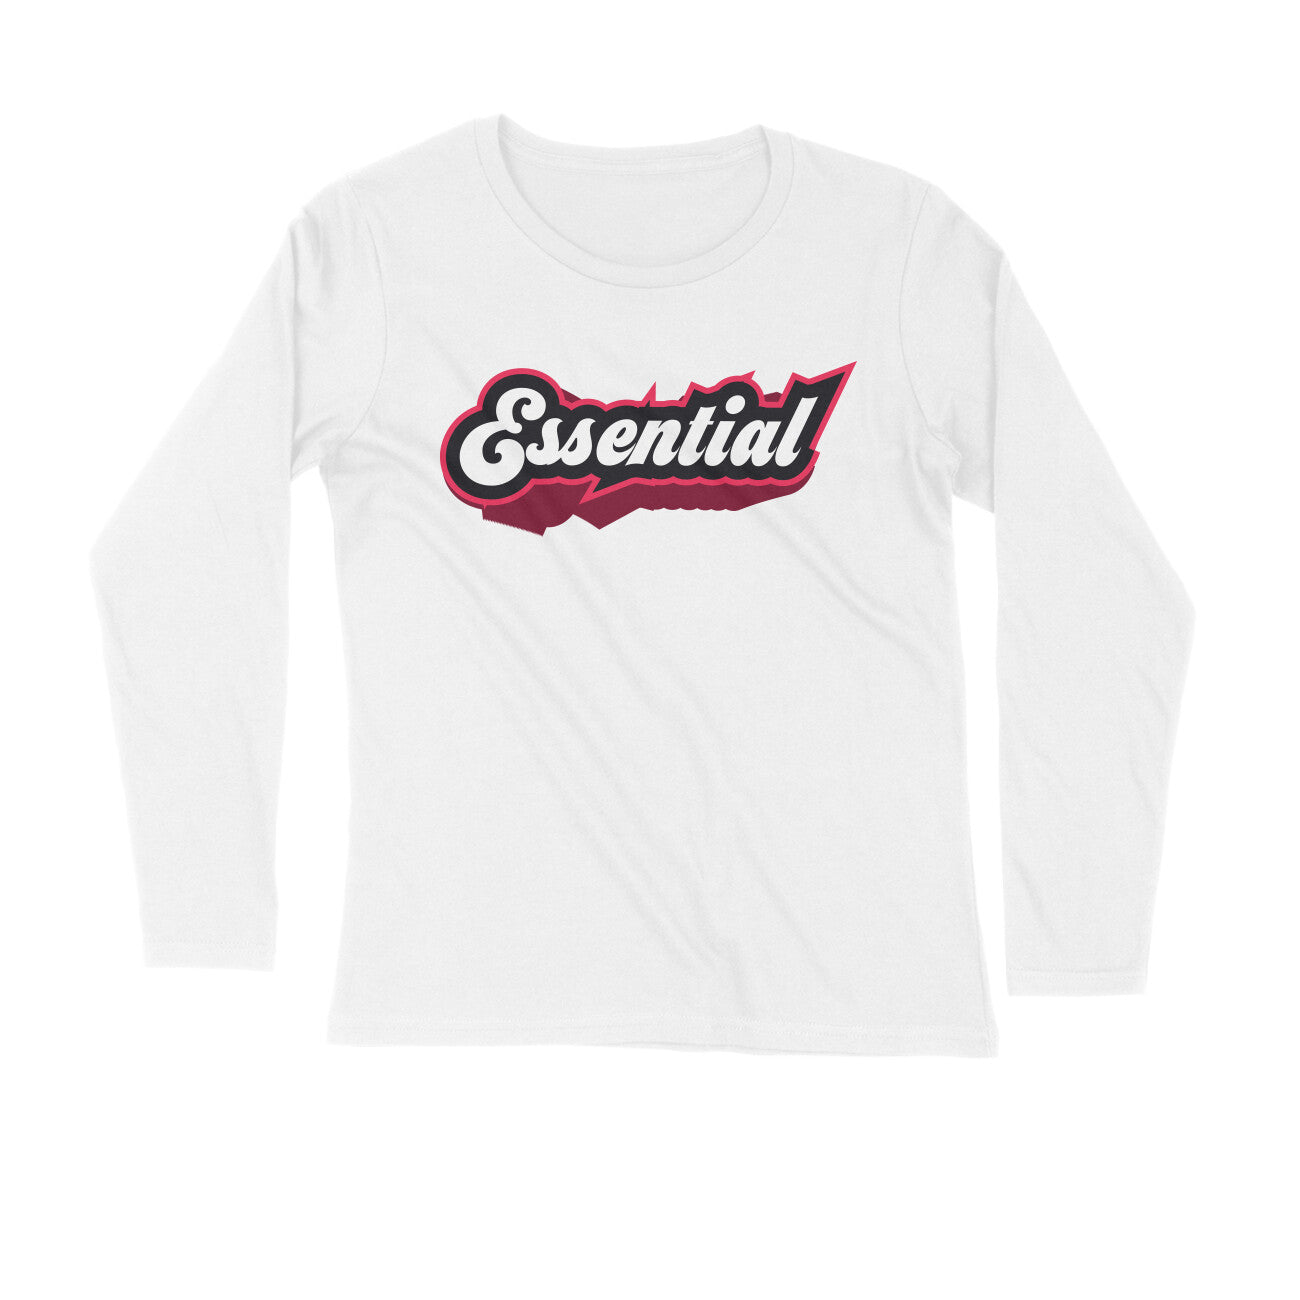 Essential Full Sleeves Printed T-Shirt